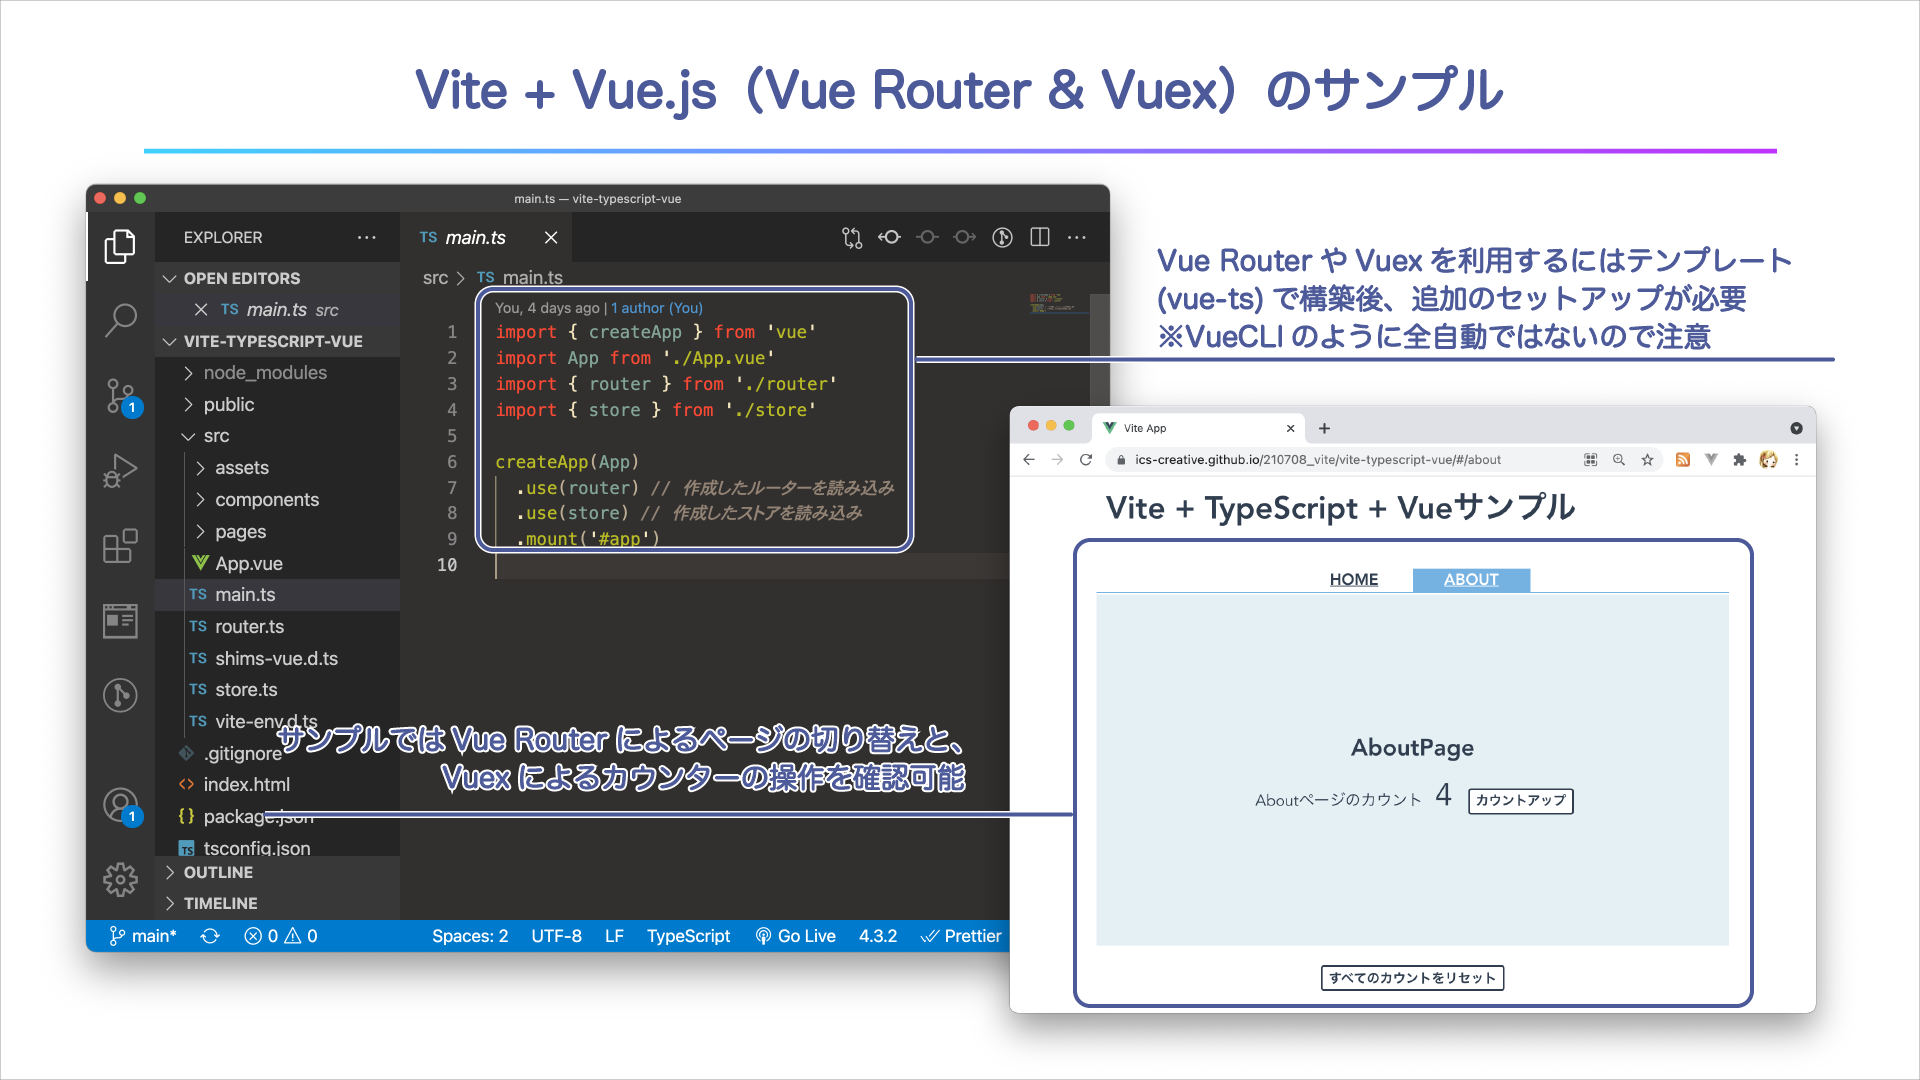 Vite + TypeScript + Vueのサンプル